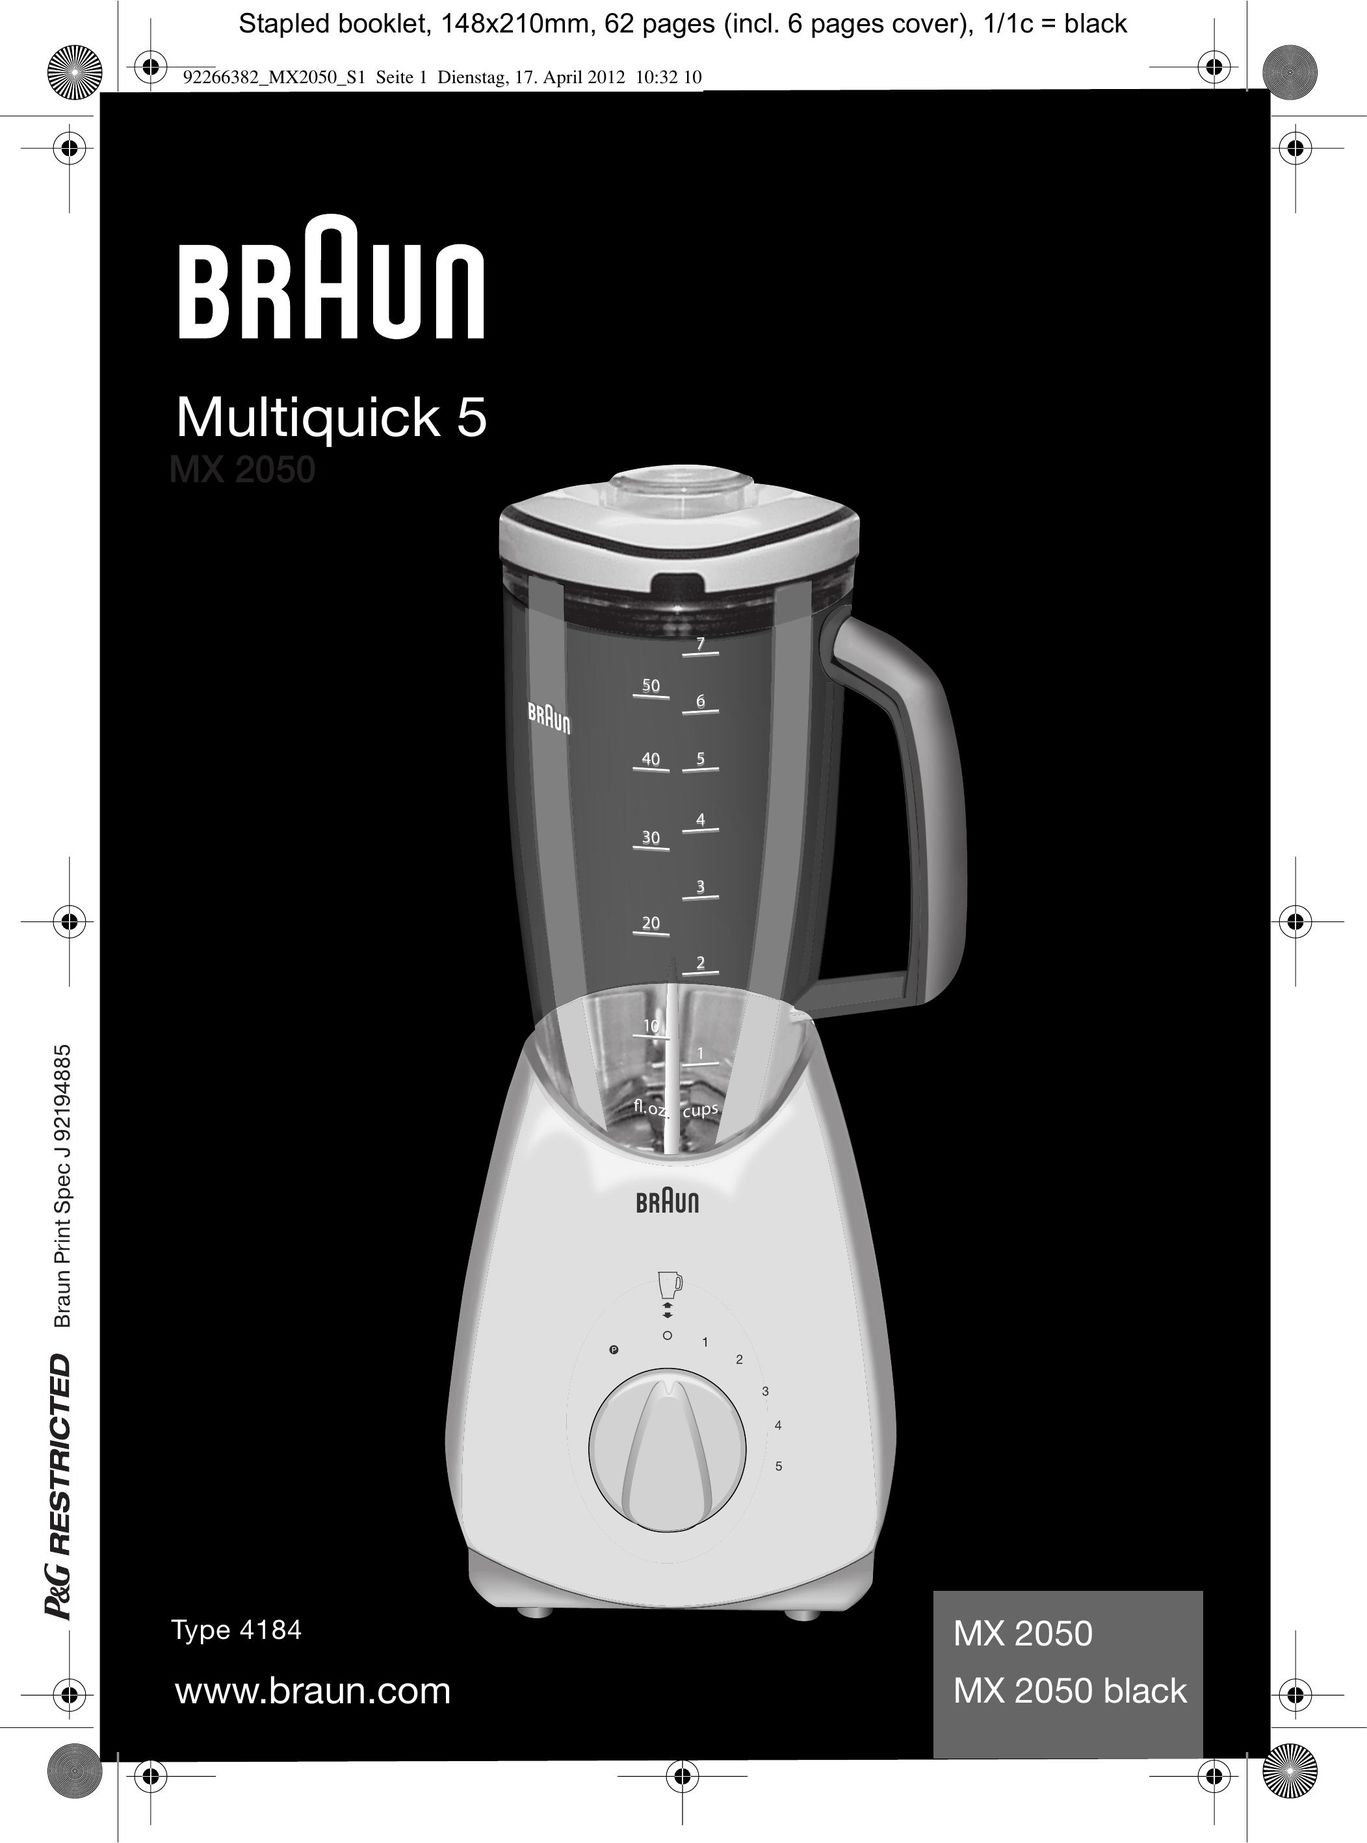 Braun MX 2050 BLACK Blender User Manual